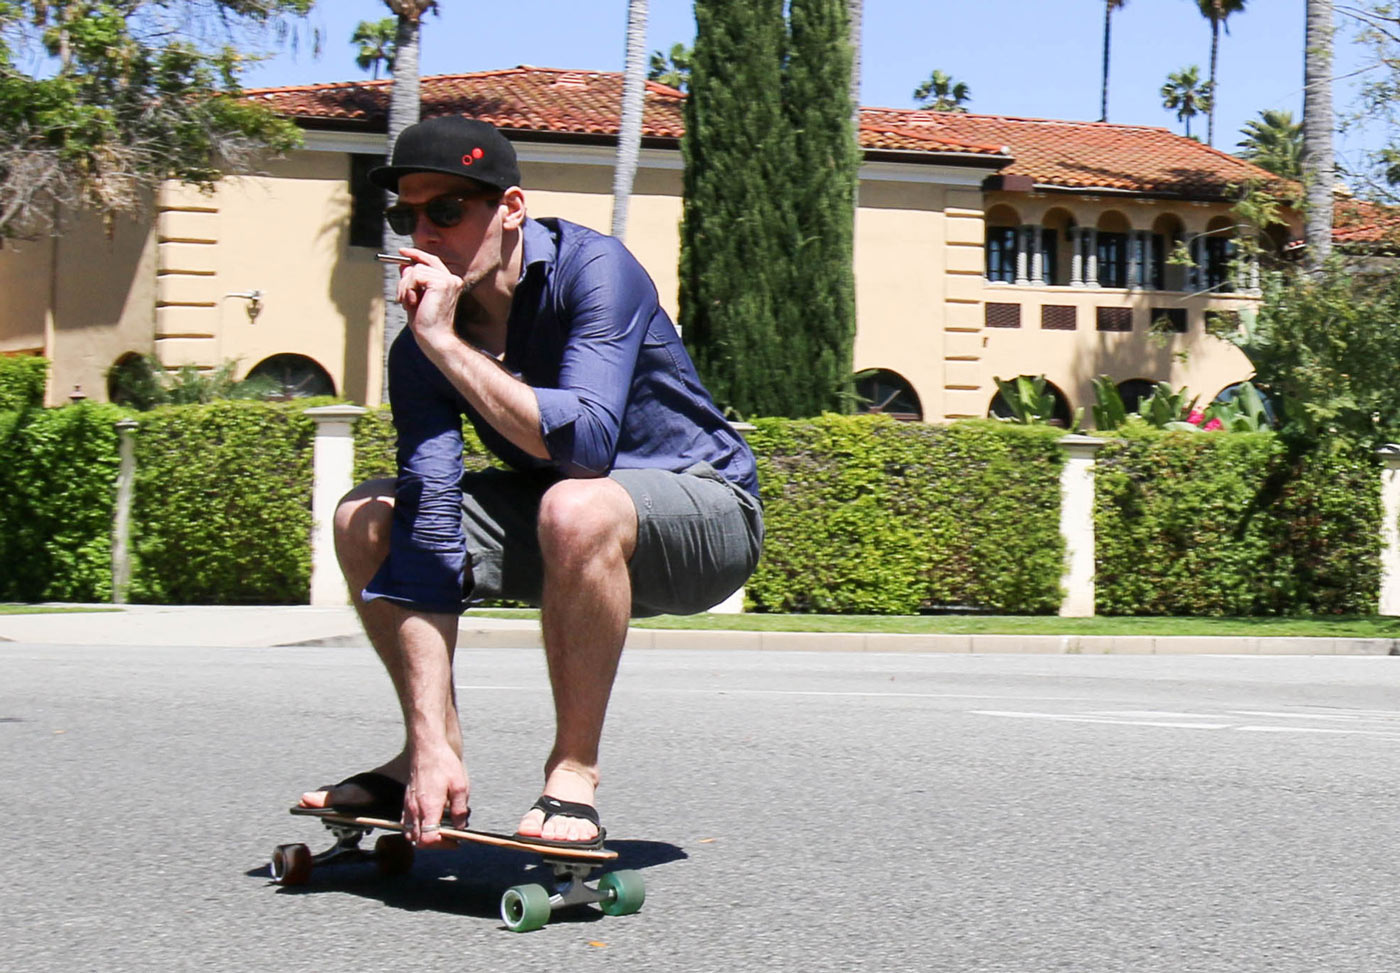 Skateboarder smokes a vaporizer while riding